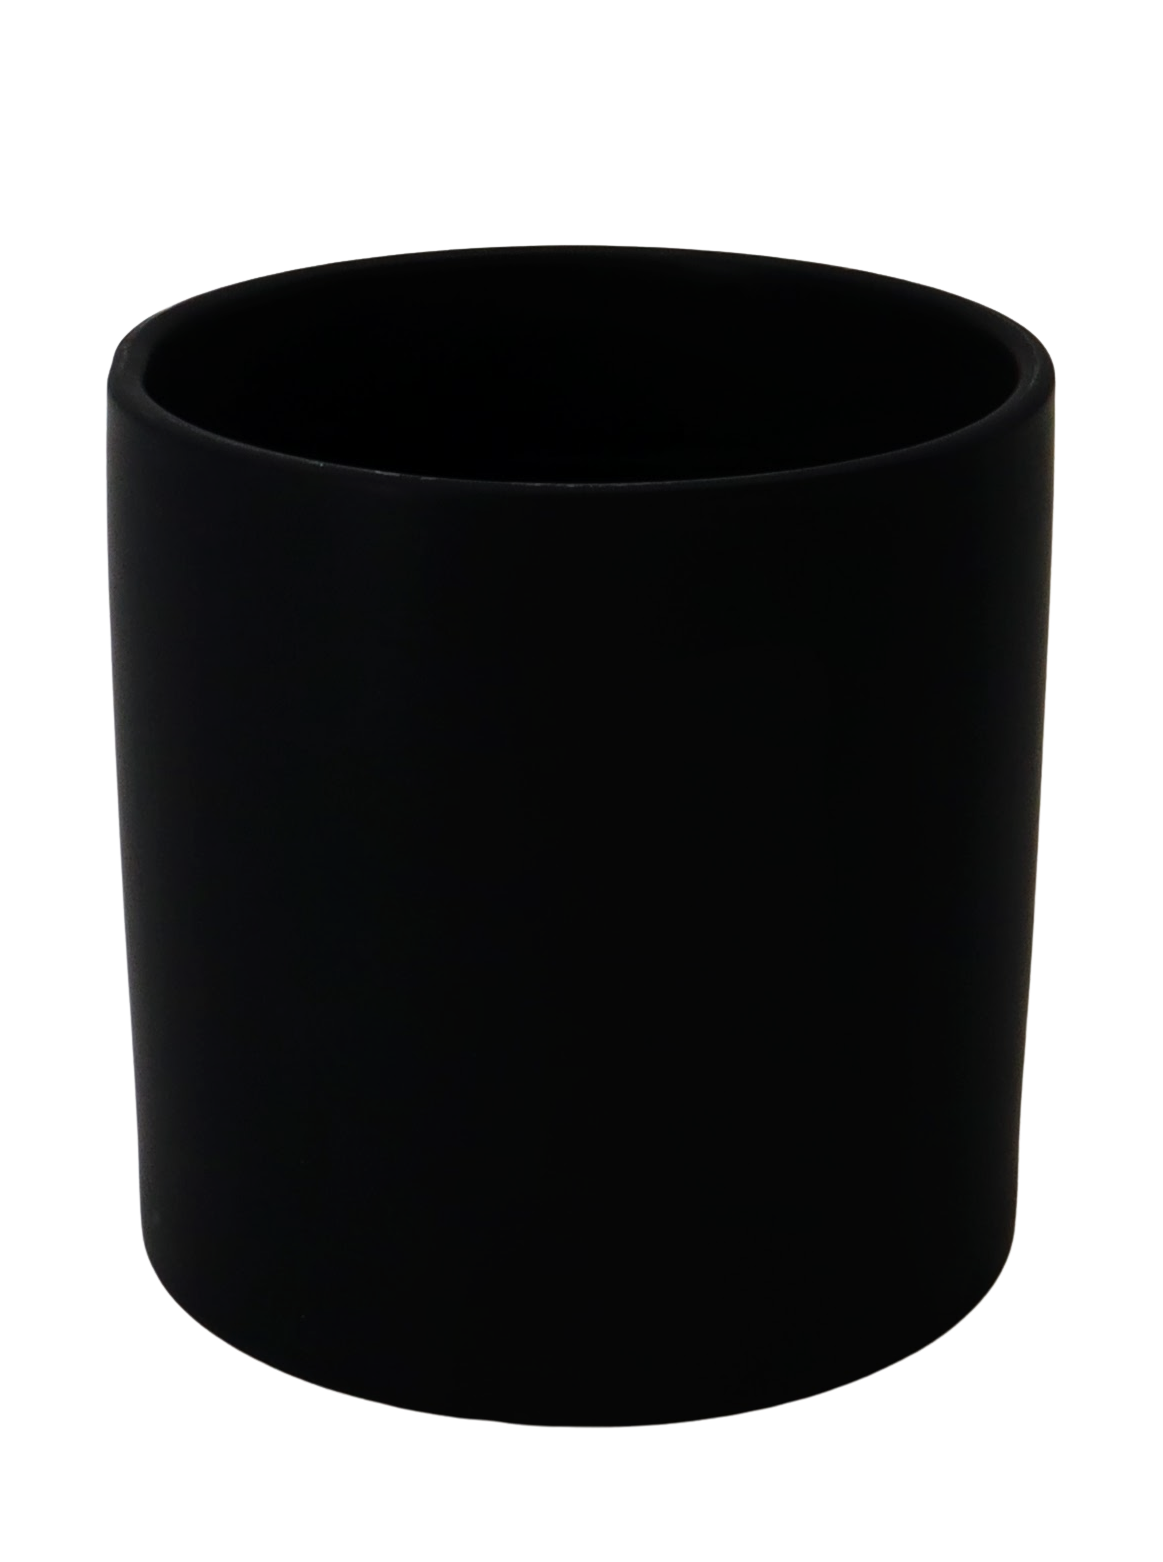 Cylinder Ceramic Container 5x5